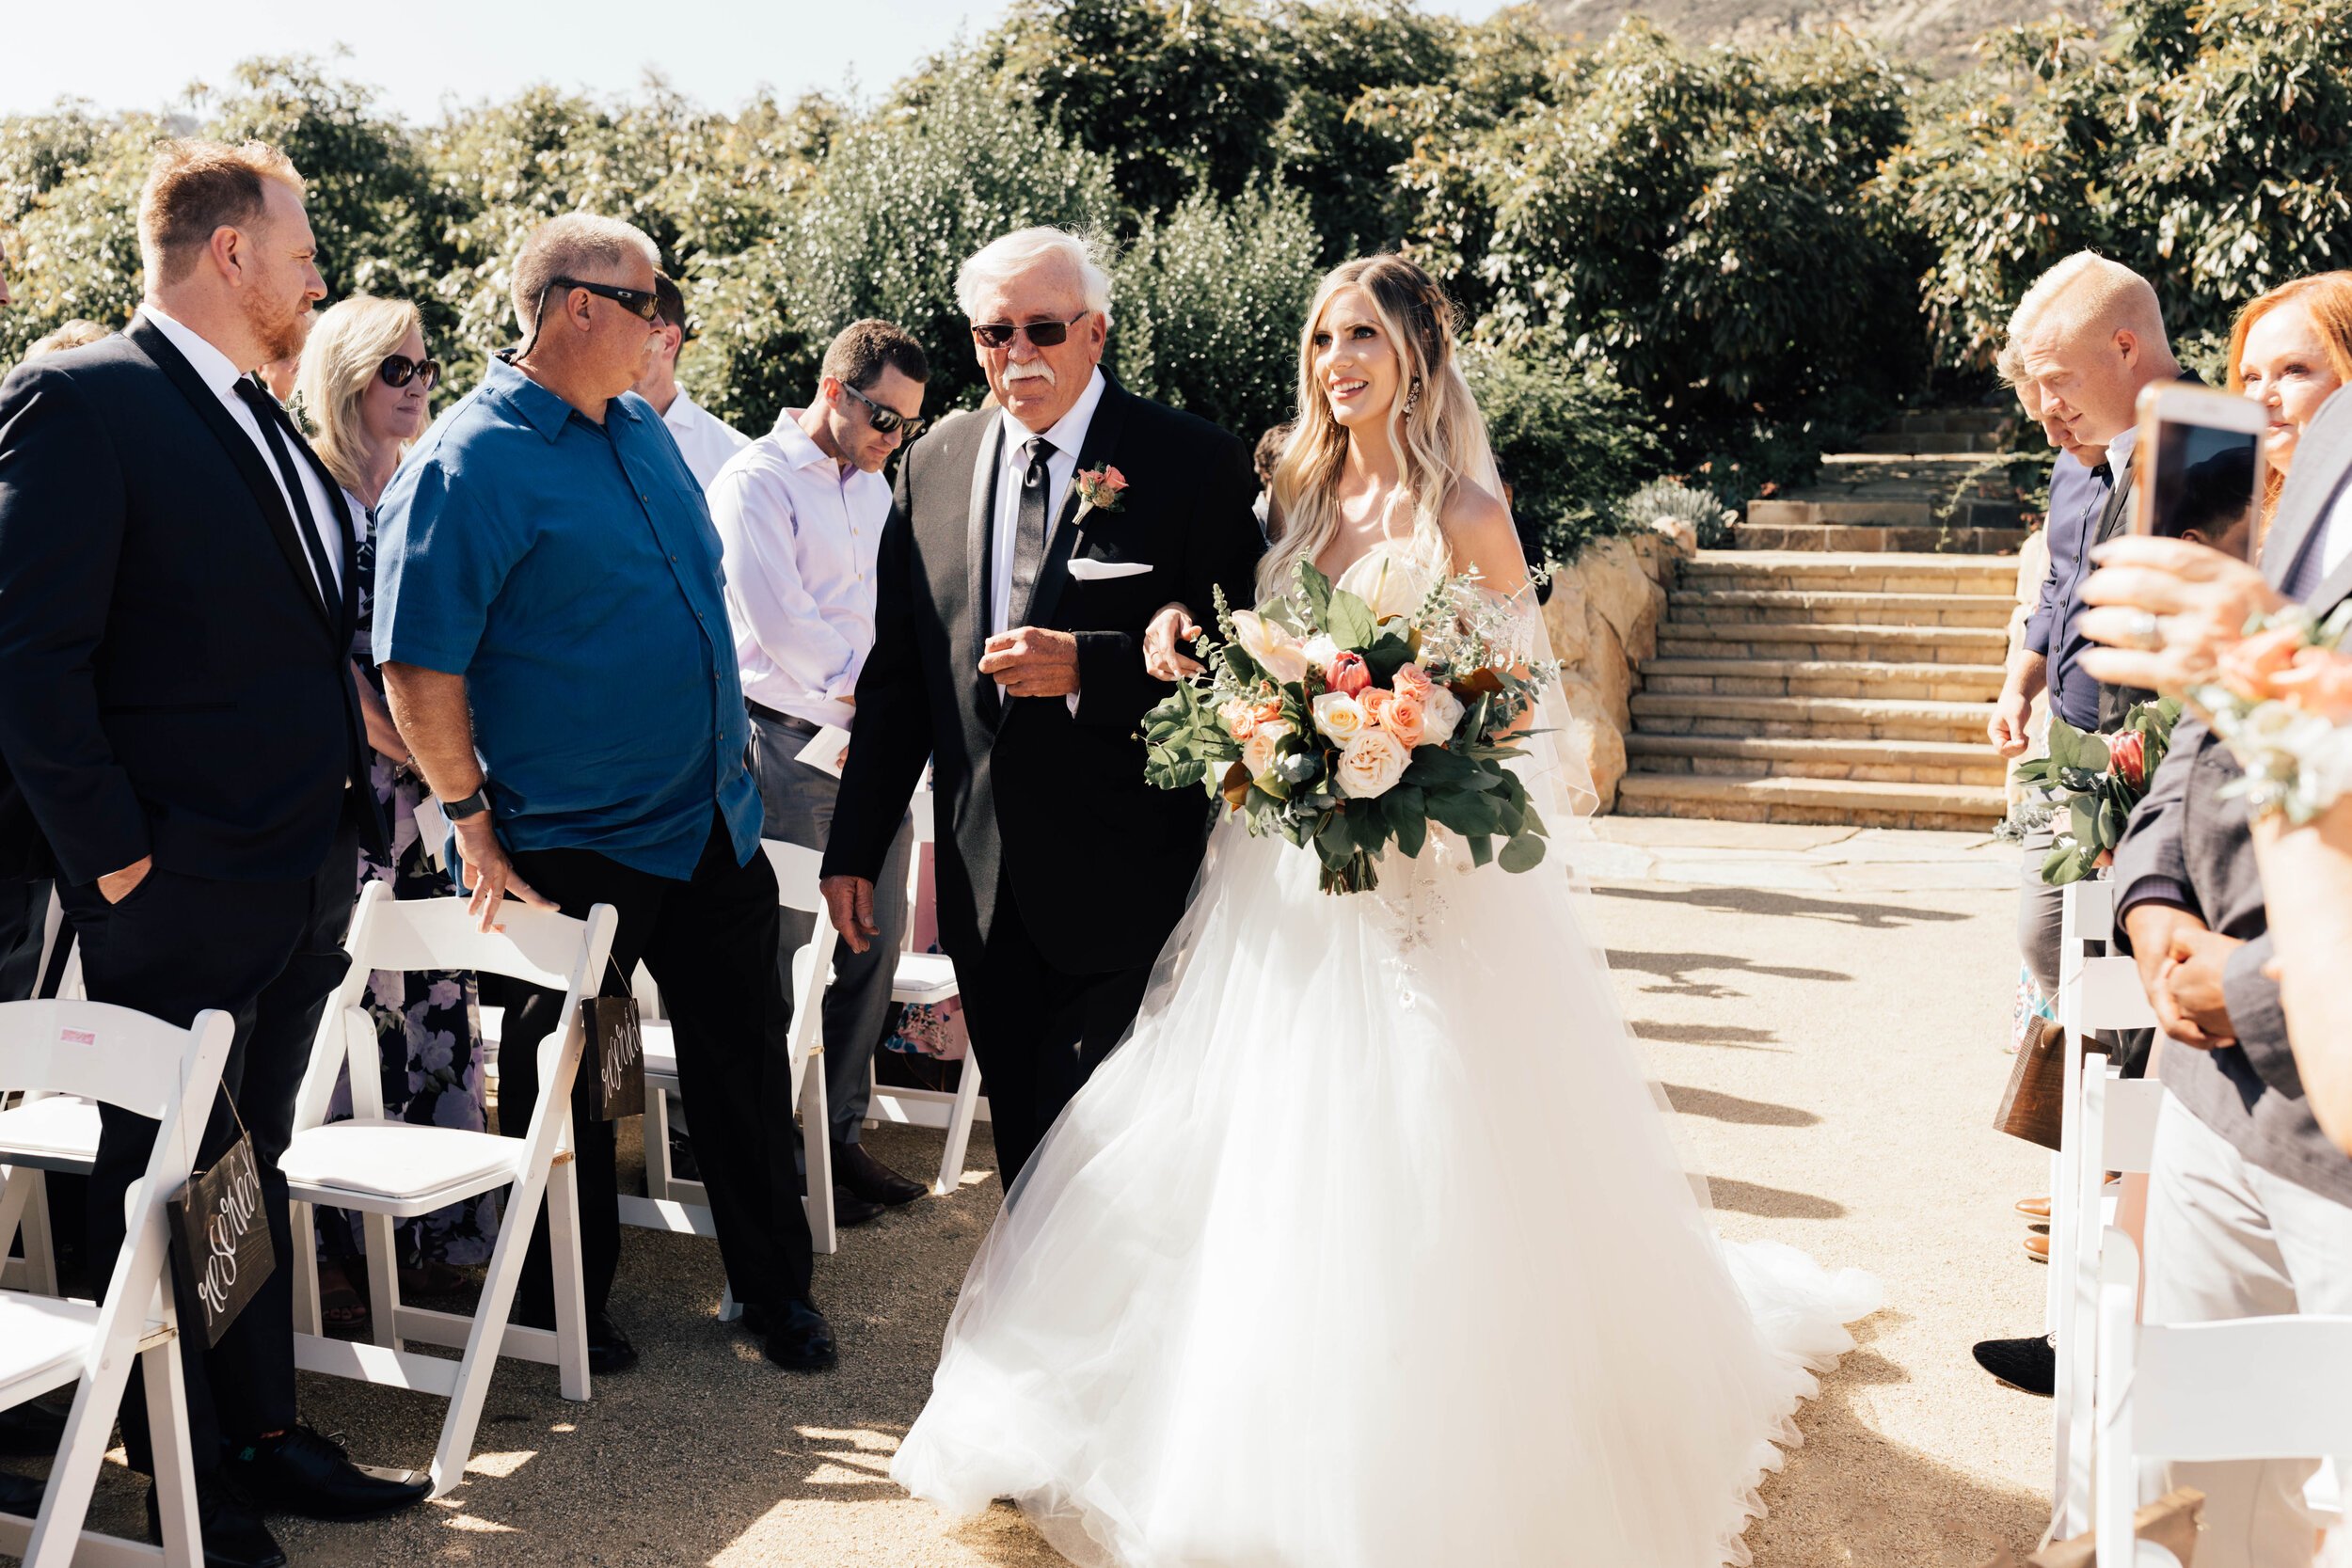 www.santabarbarawedding.com | Bria Peterson | Ocean View Farm | KB Events | Tangled Lotus | Nicquel | Amigo Party Rentals | Bride Walks Down the Aisle with Father